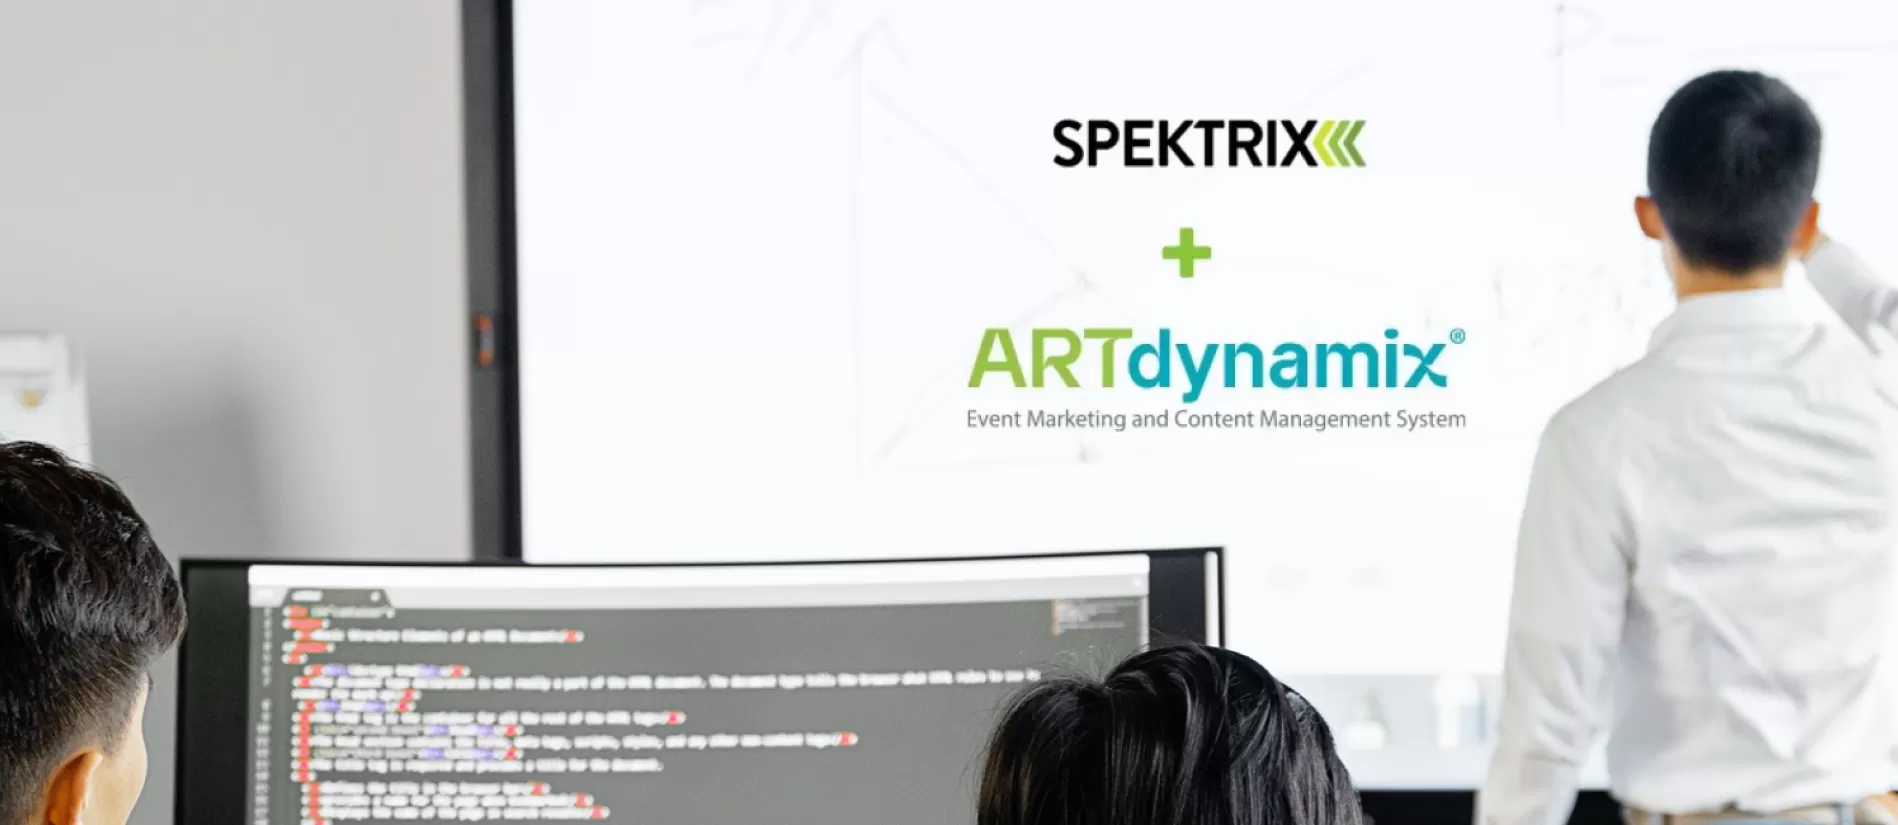 ARTdynamix and Spektrix are an effective combination.